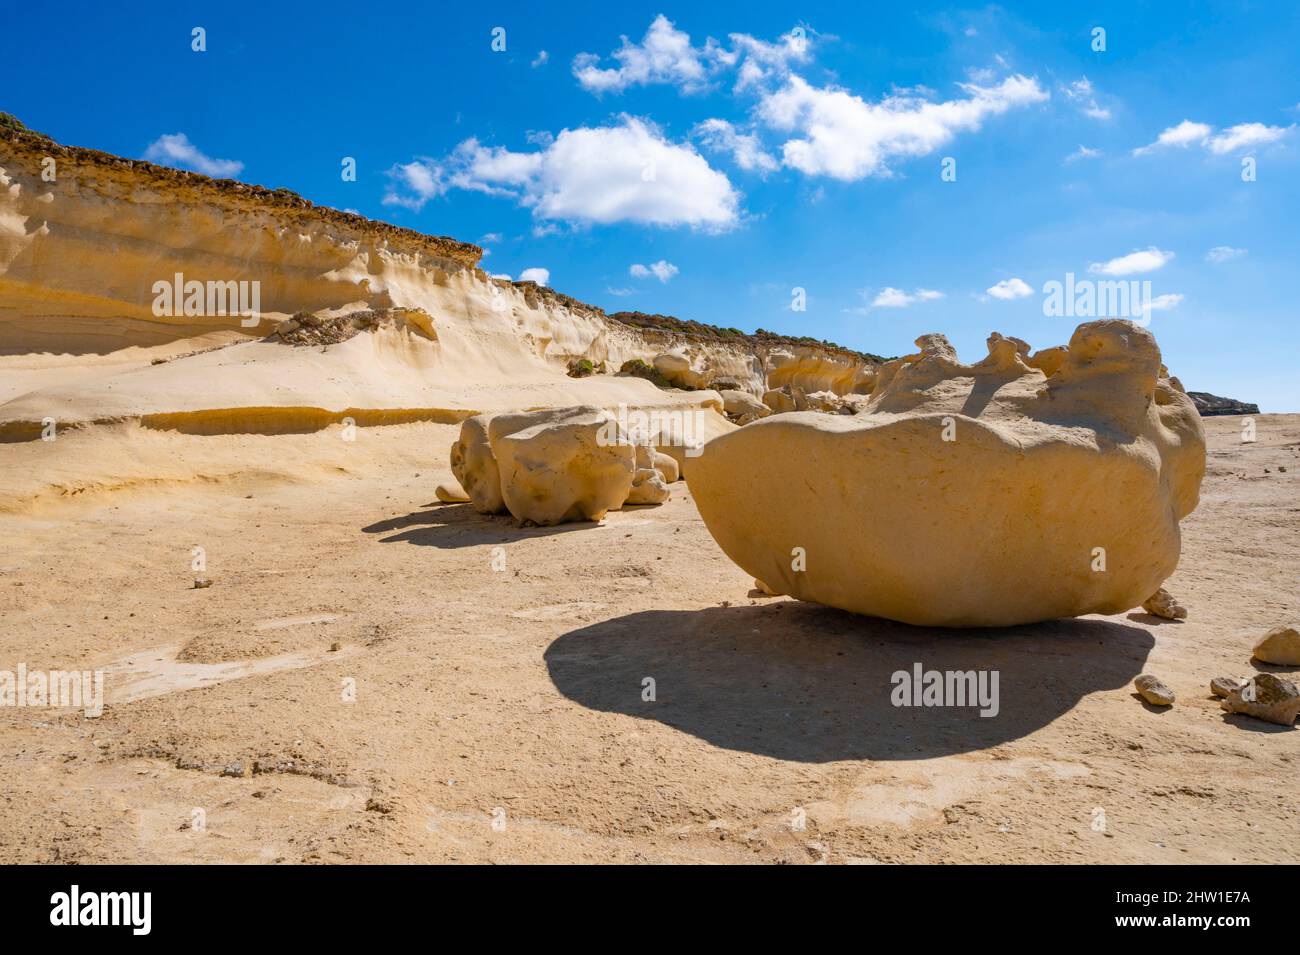 Malta, Gozo island, cliffs of Xlendi Stock Photo